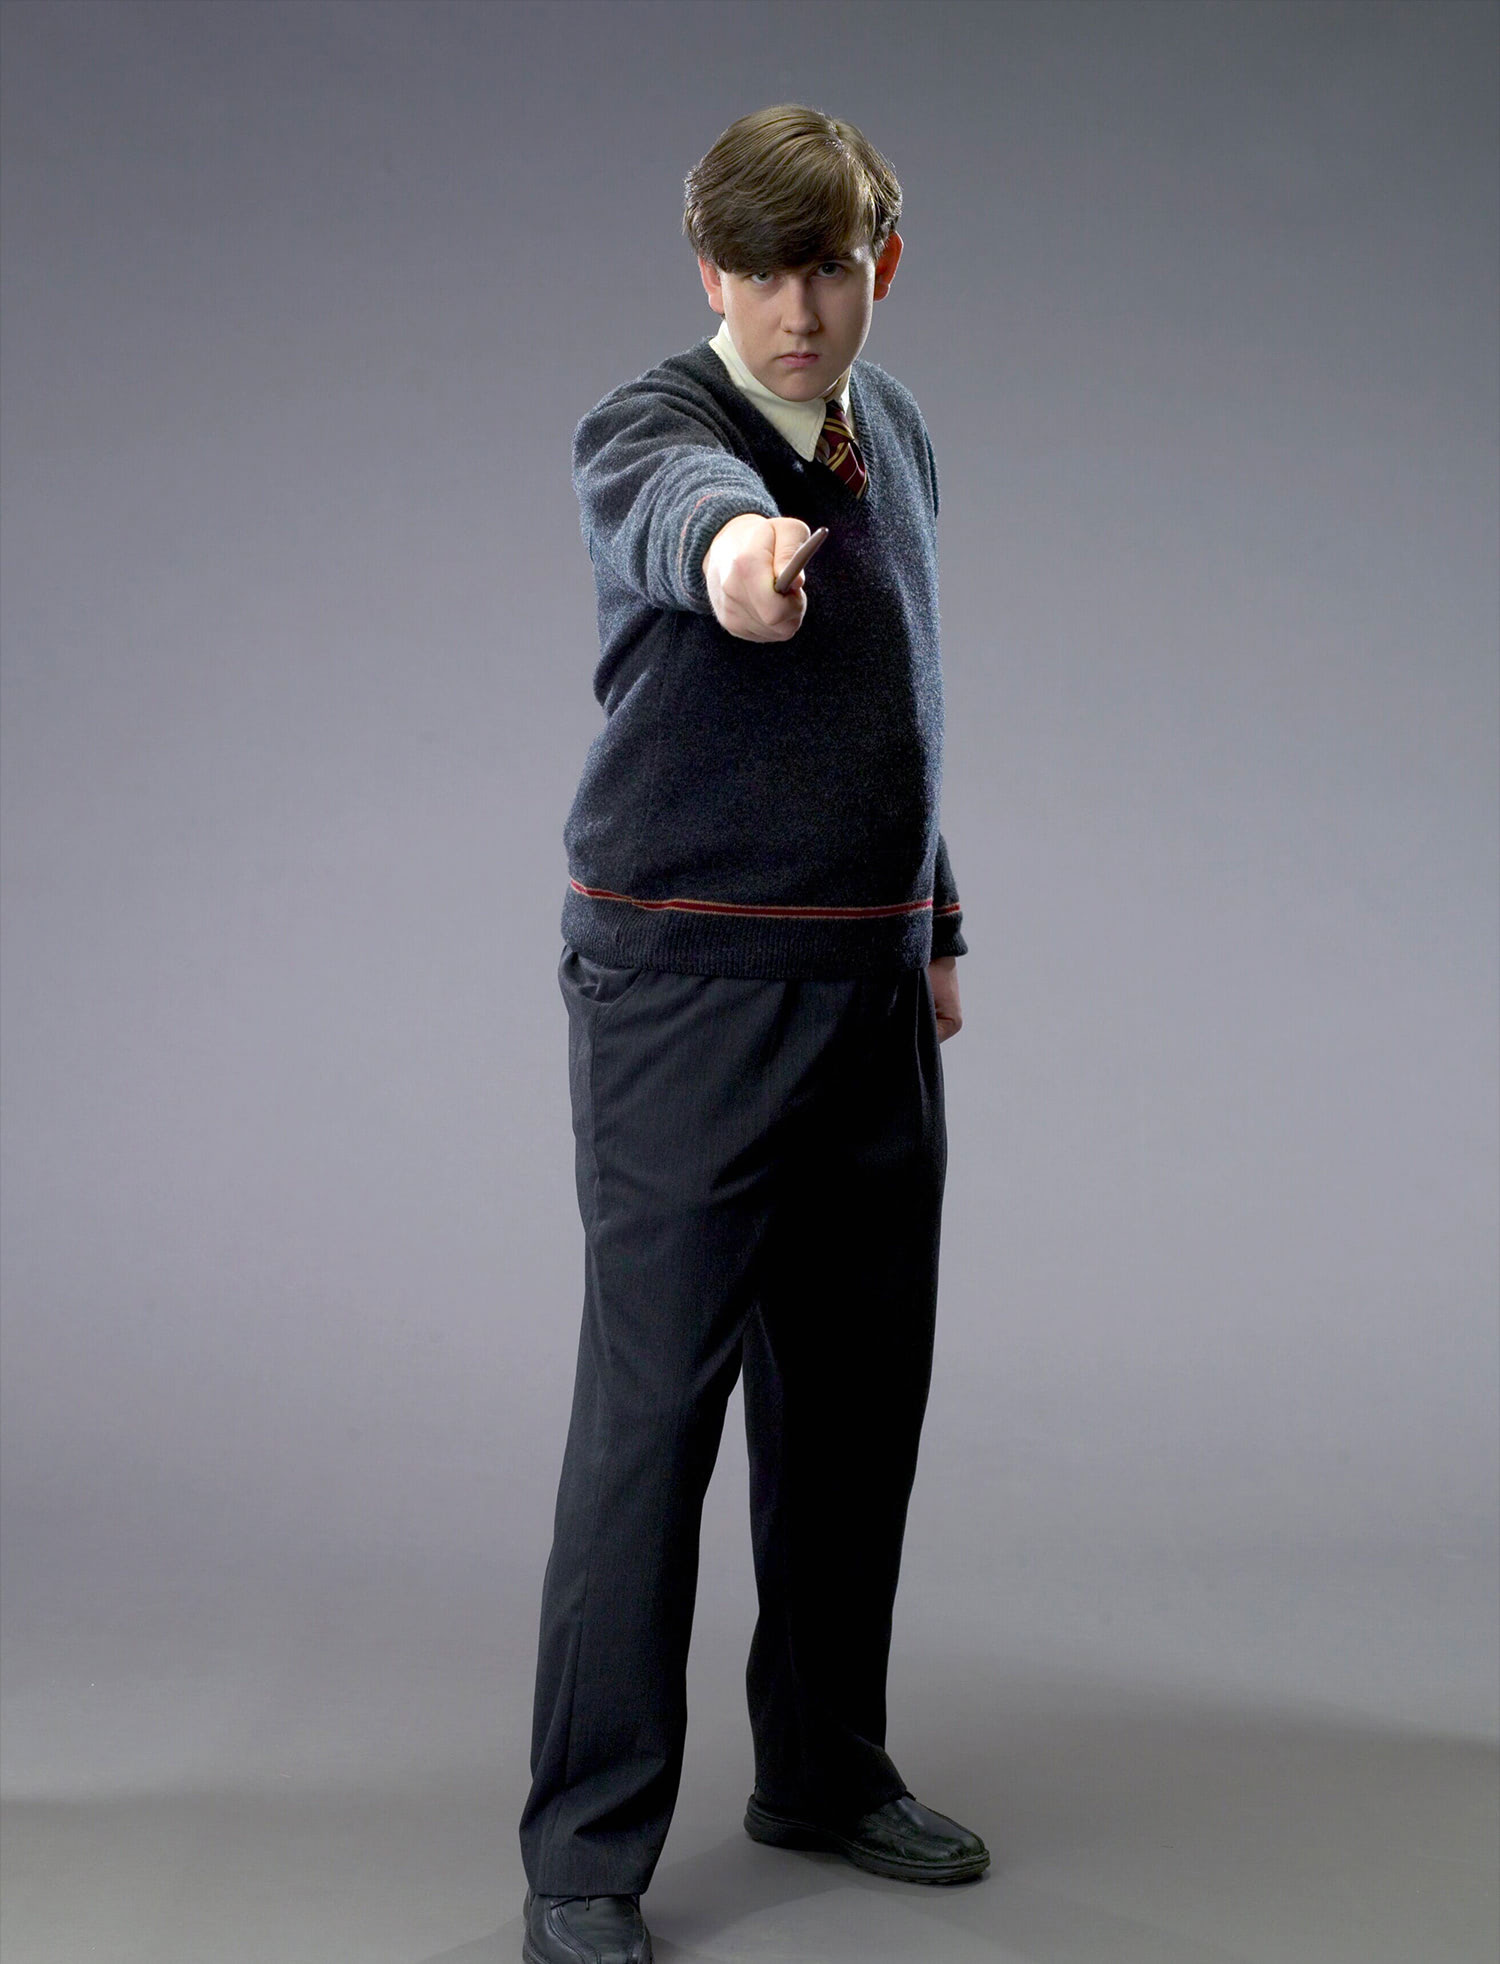 Neville Longbottom, Harry Potter's friend, Magical school, Courageous hero, 1500x1970 HD Handy